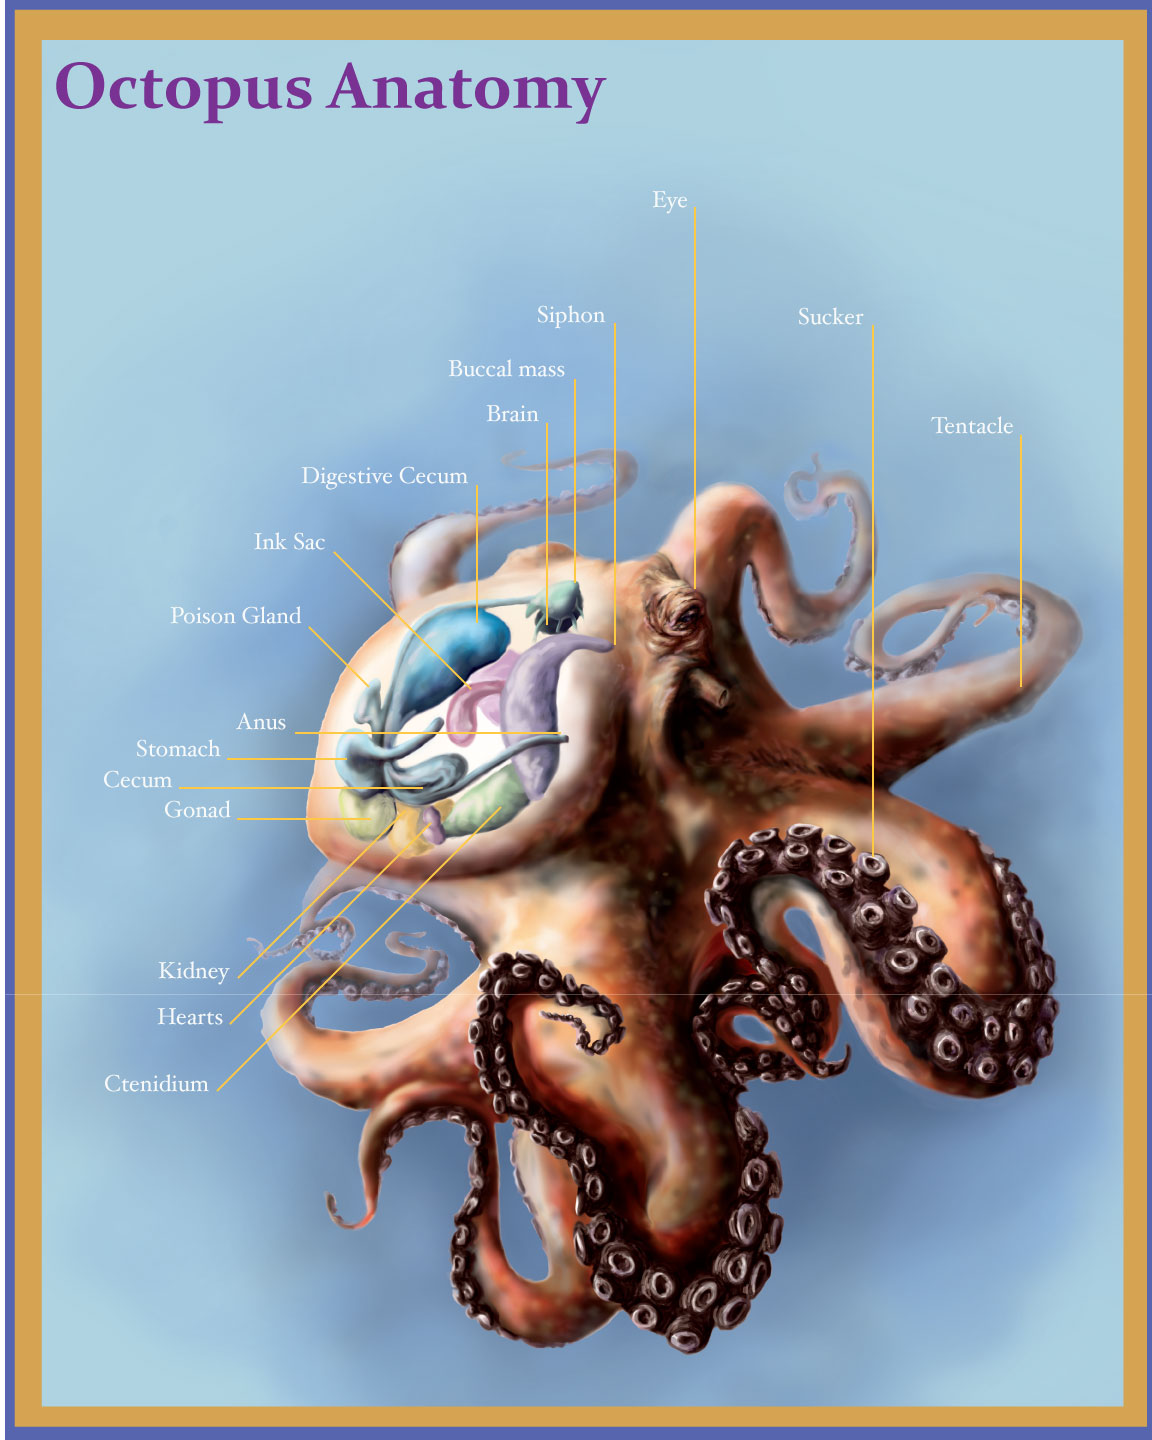 octopus_anatomy_by_bigredsharks-d35b8cd